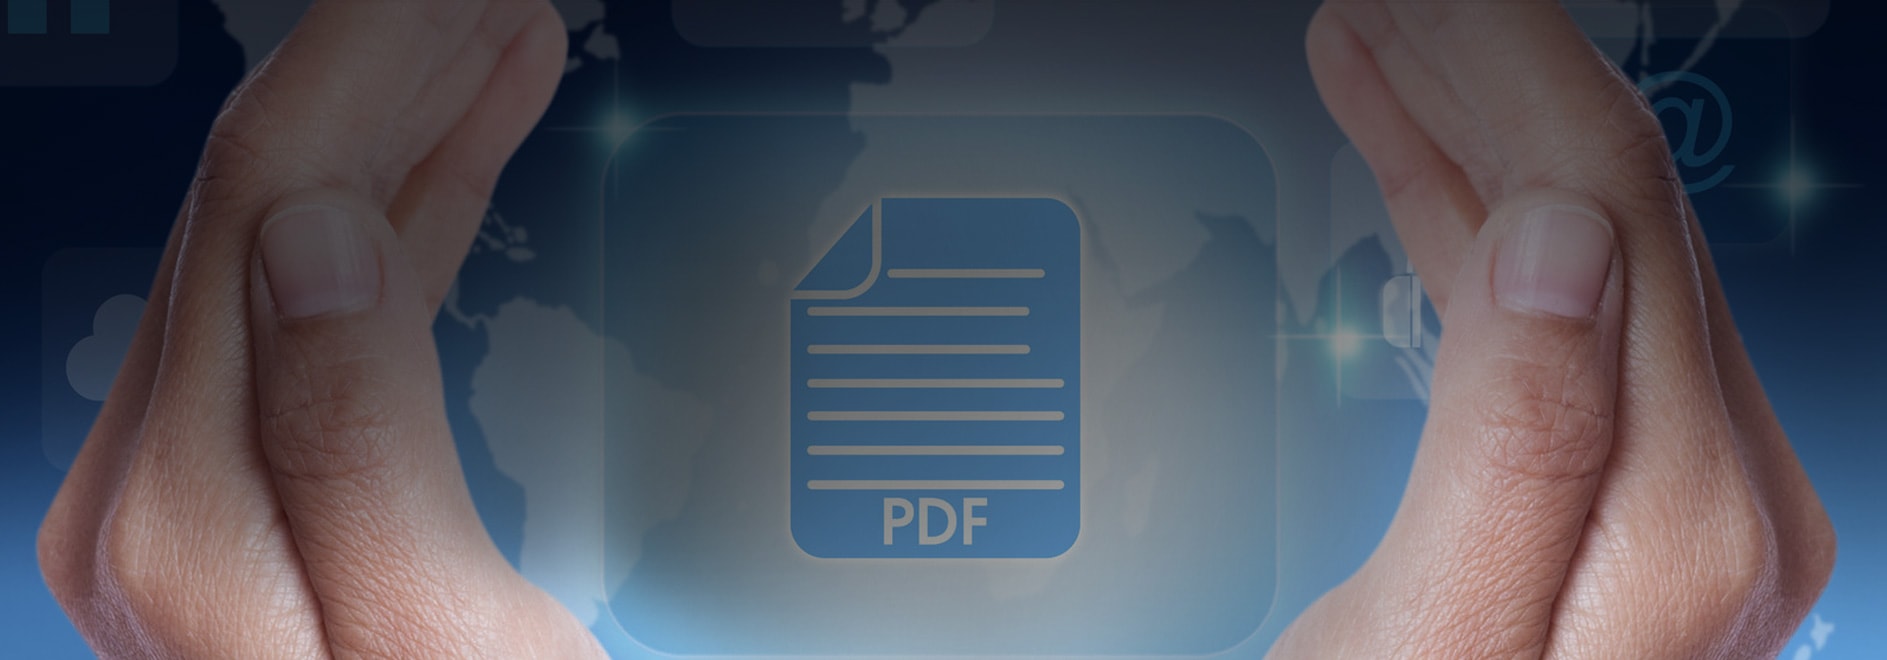 SAVE PDF ROTATED VIEW